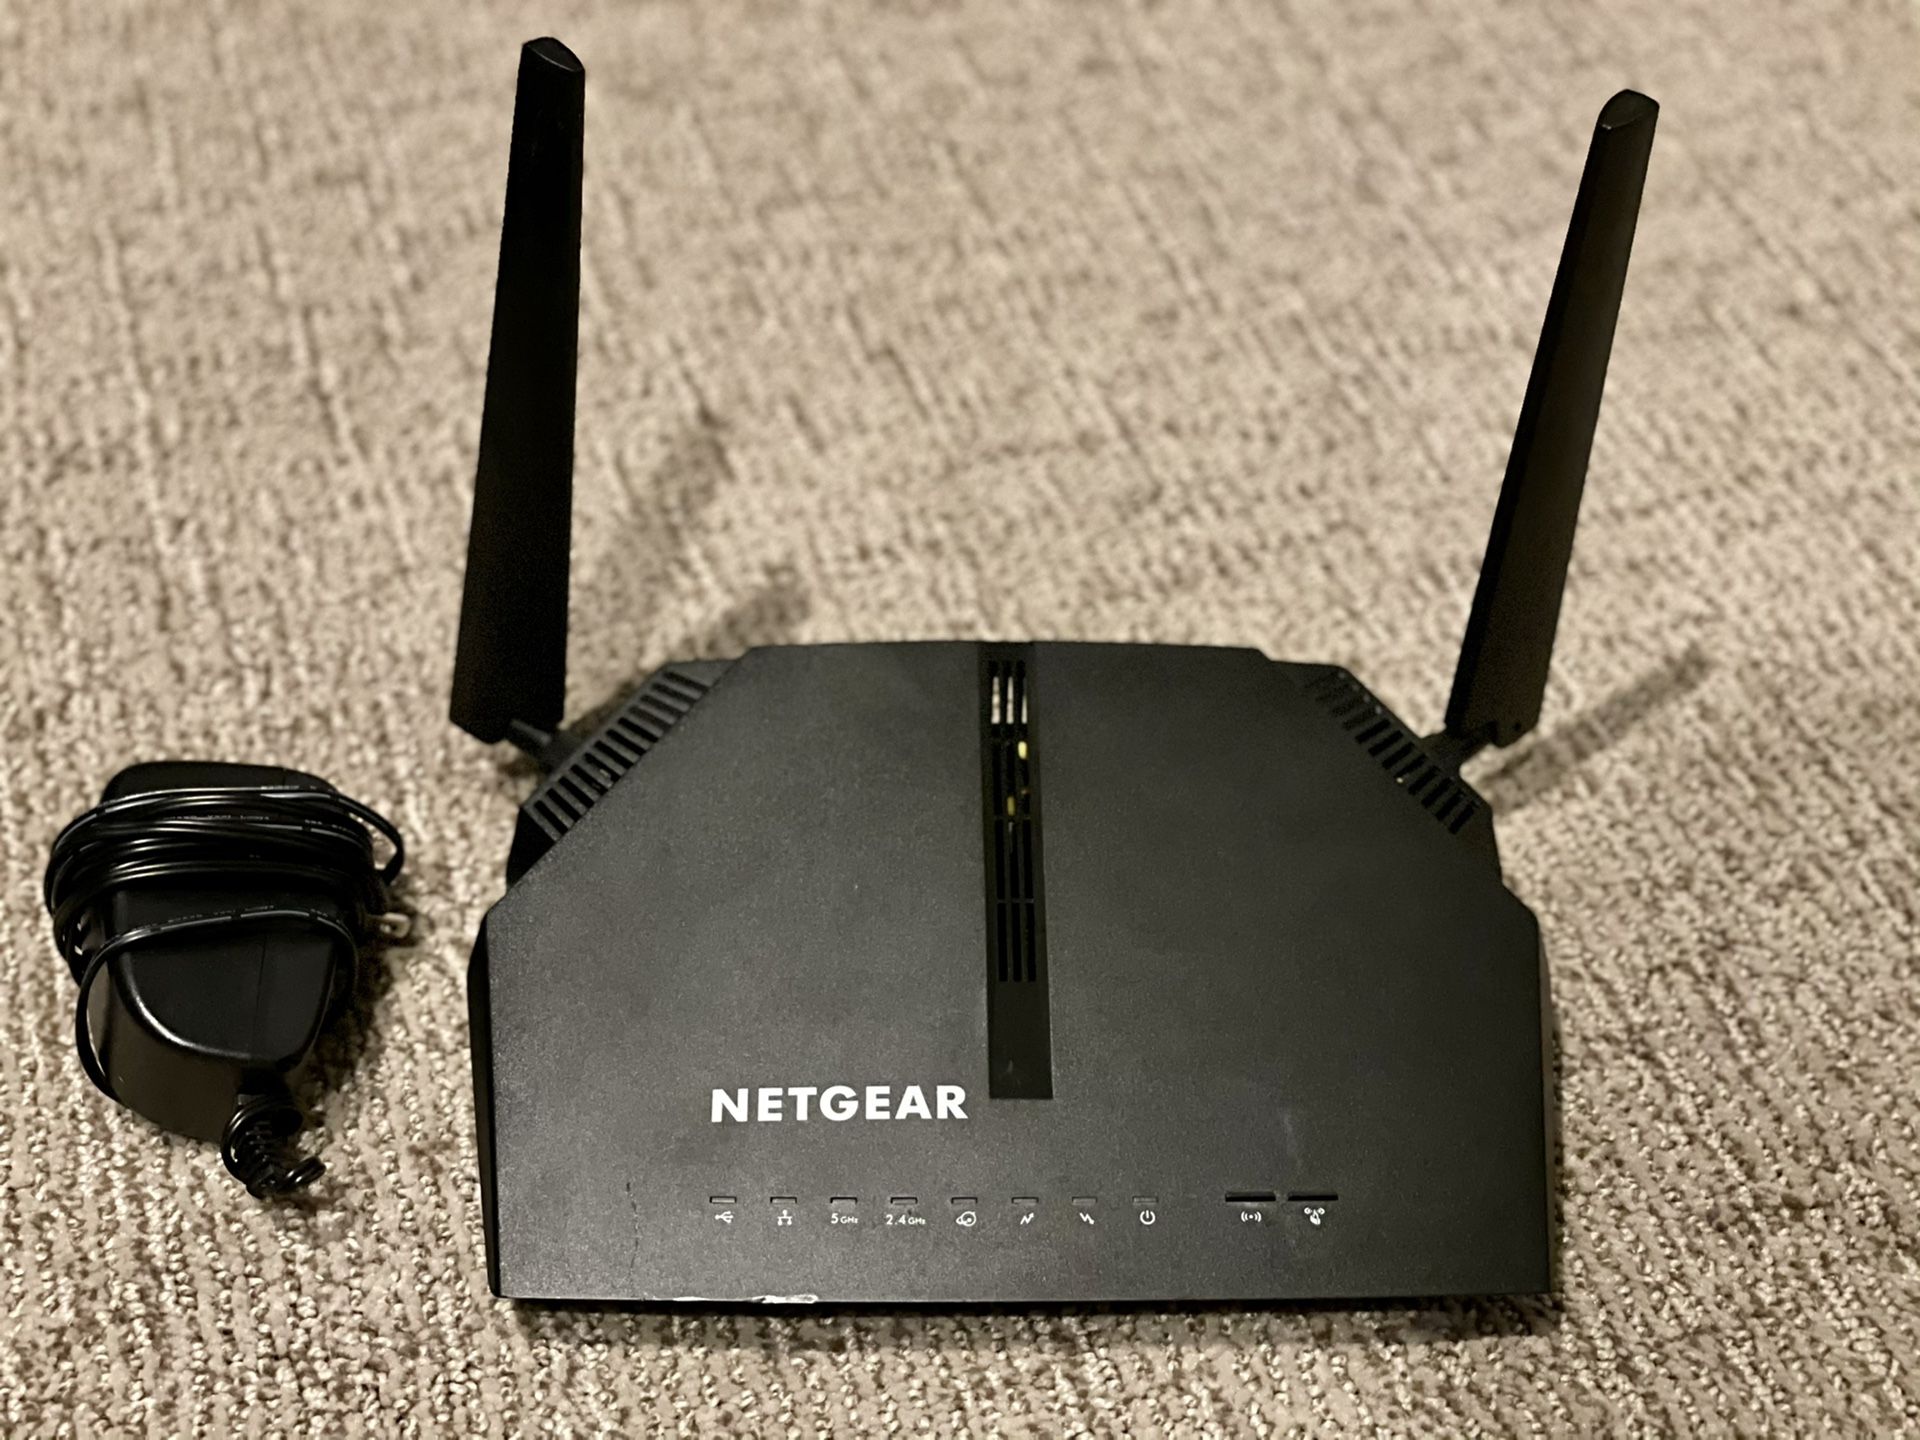 Netgear cable modem & WiFi router